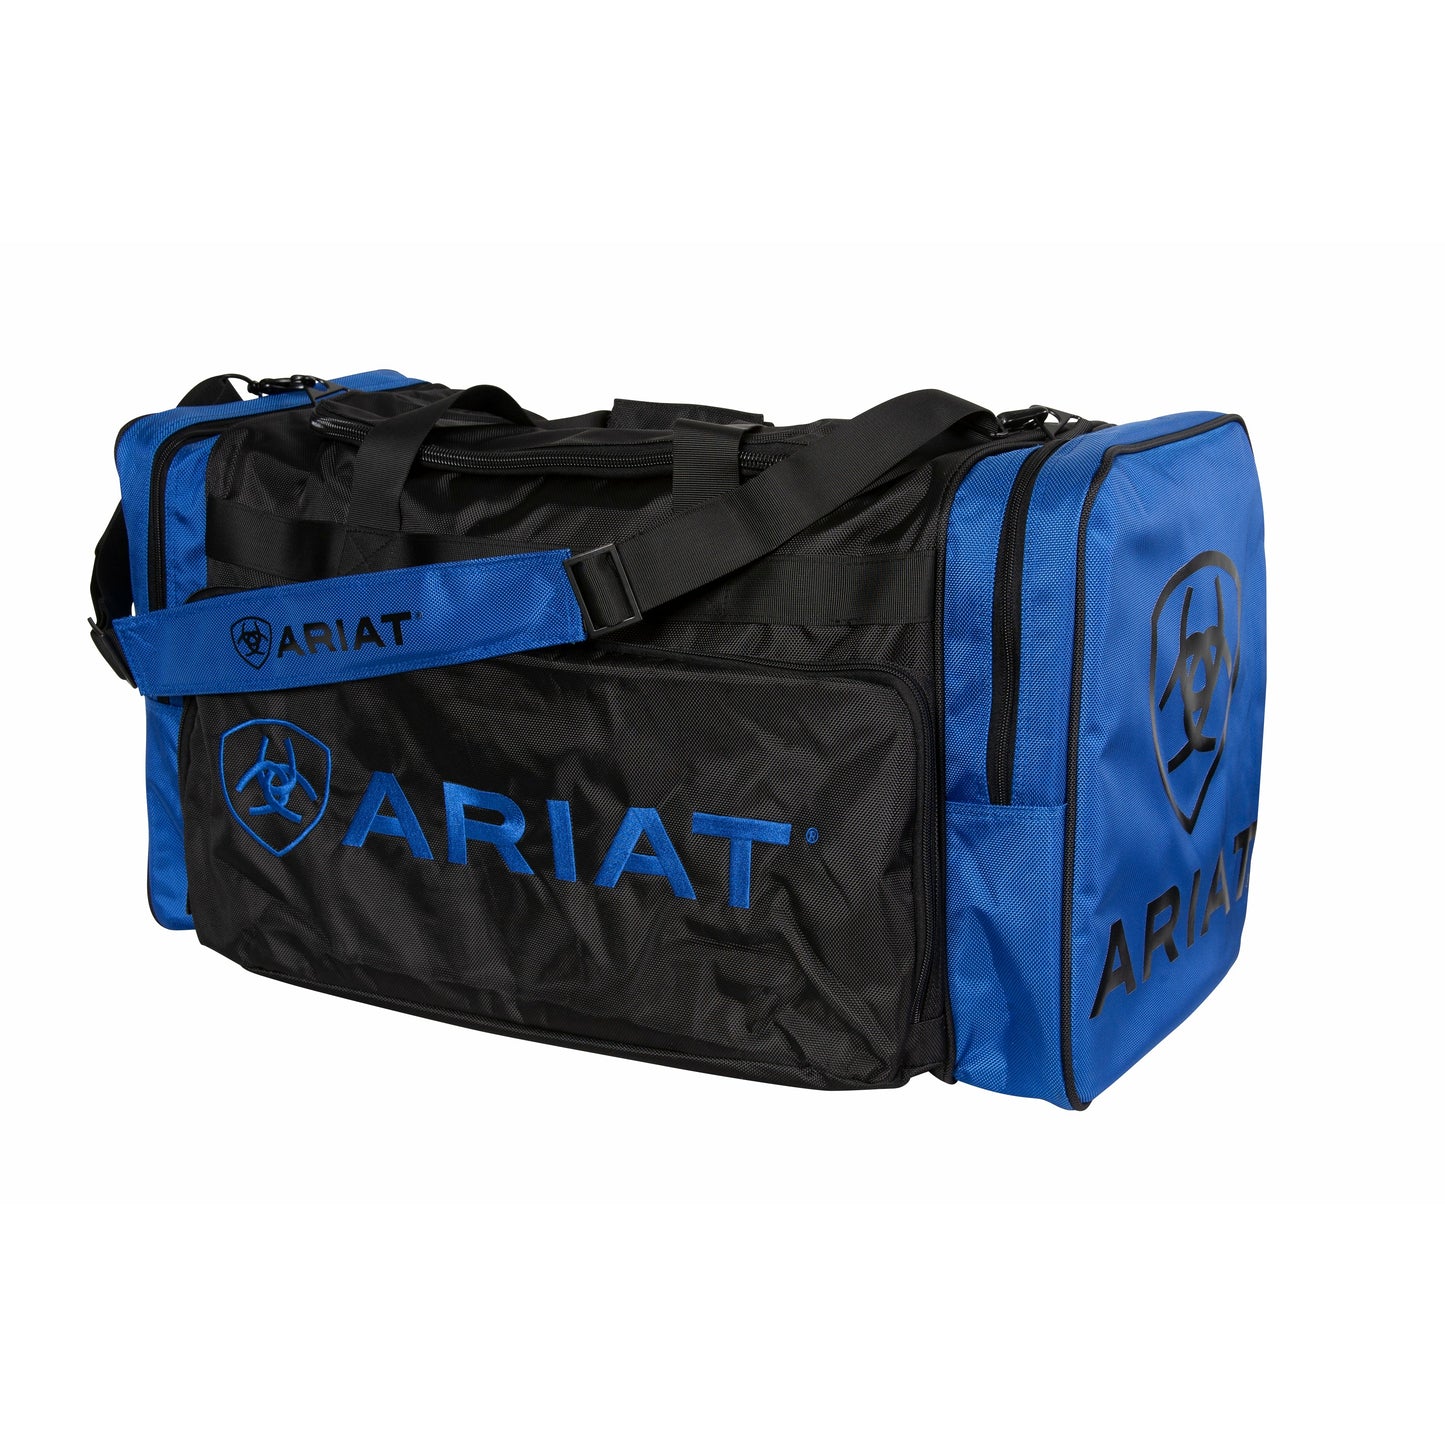 Ariat Gear Bag Cobalt/Black